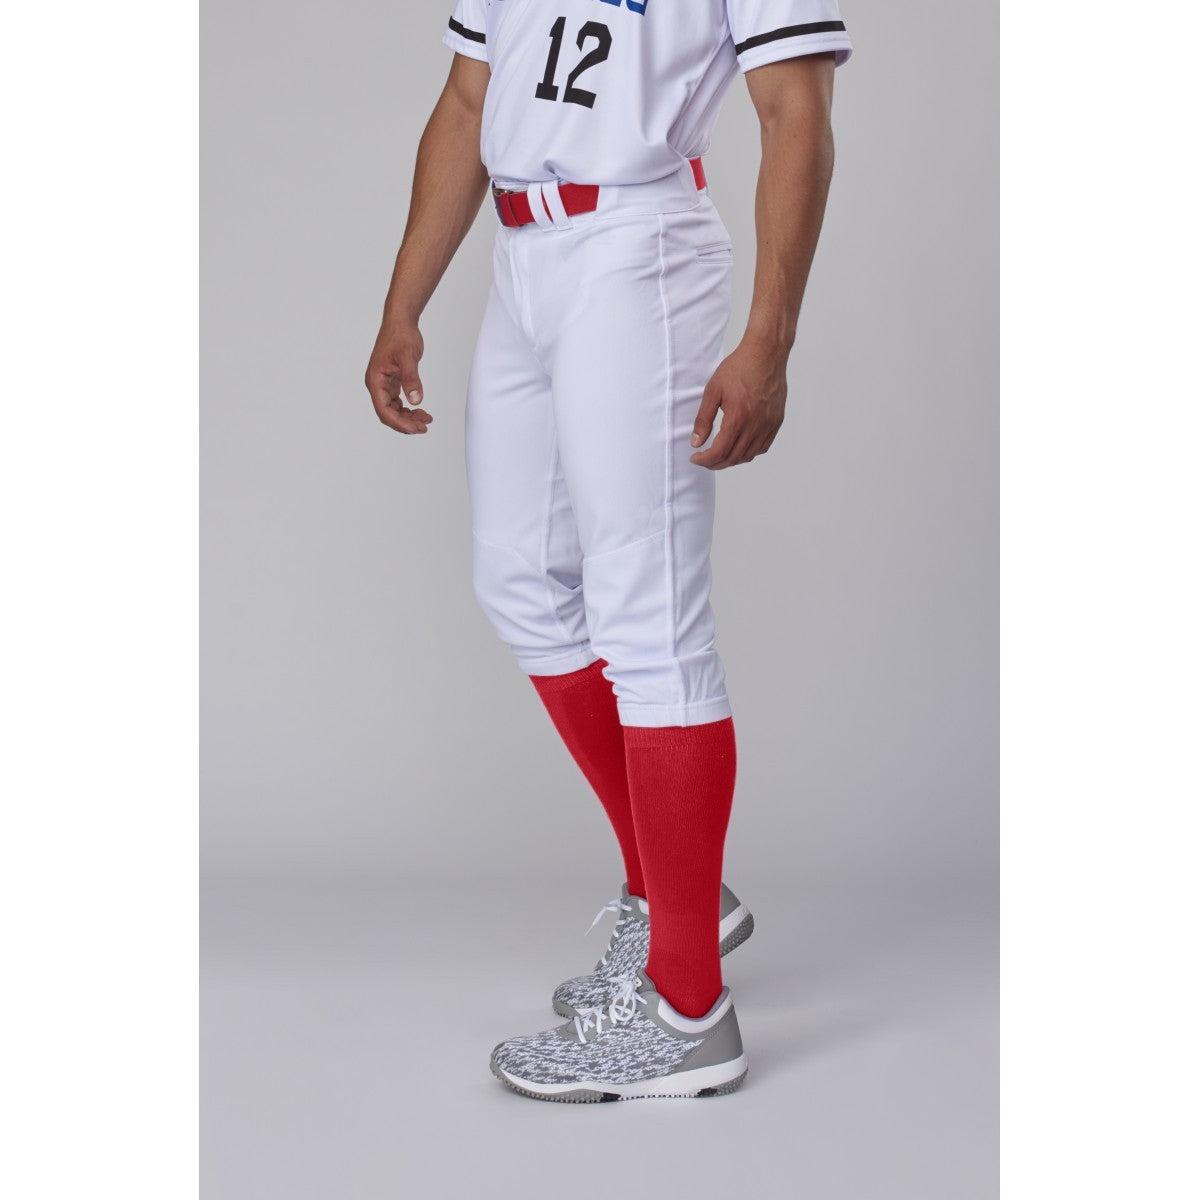 Champro Knicker Baseball Pants with Braid – Bush-Keller Sporting Goods